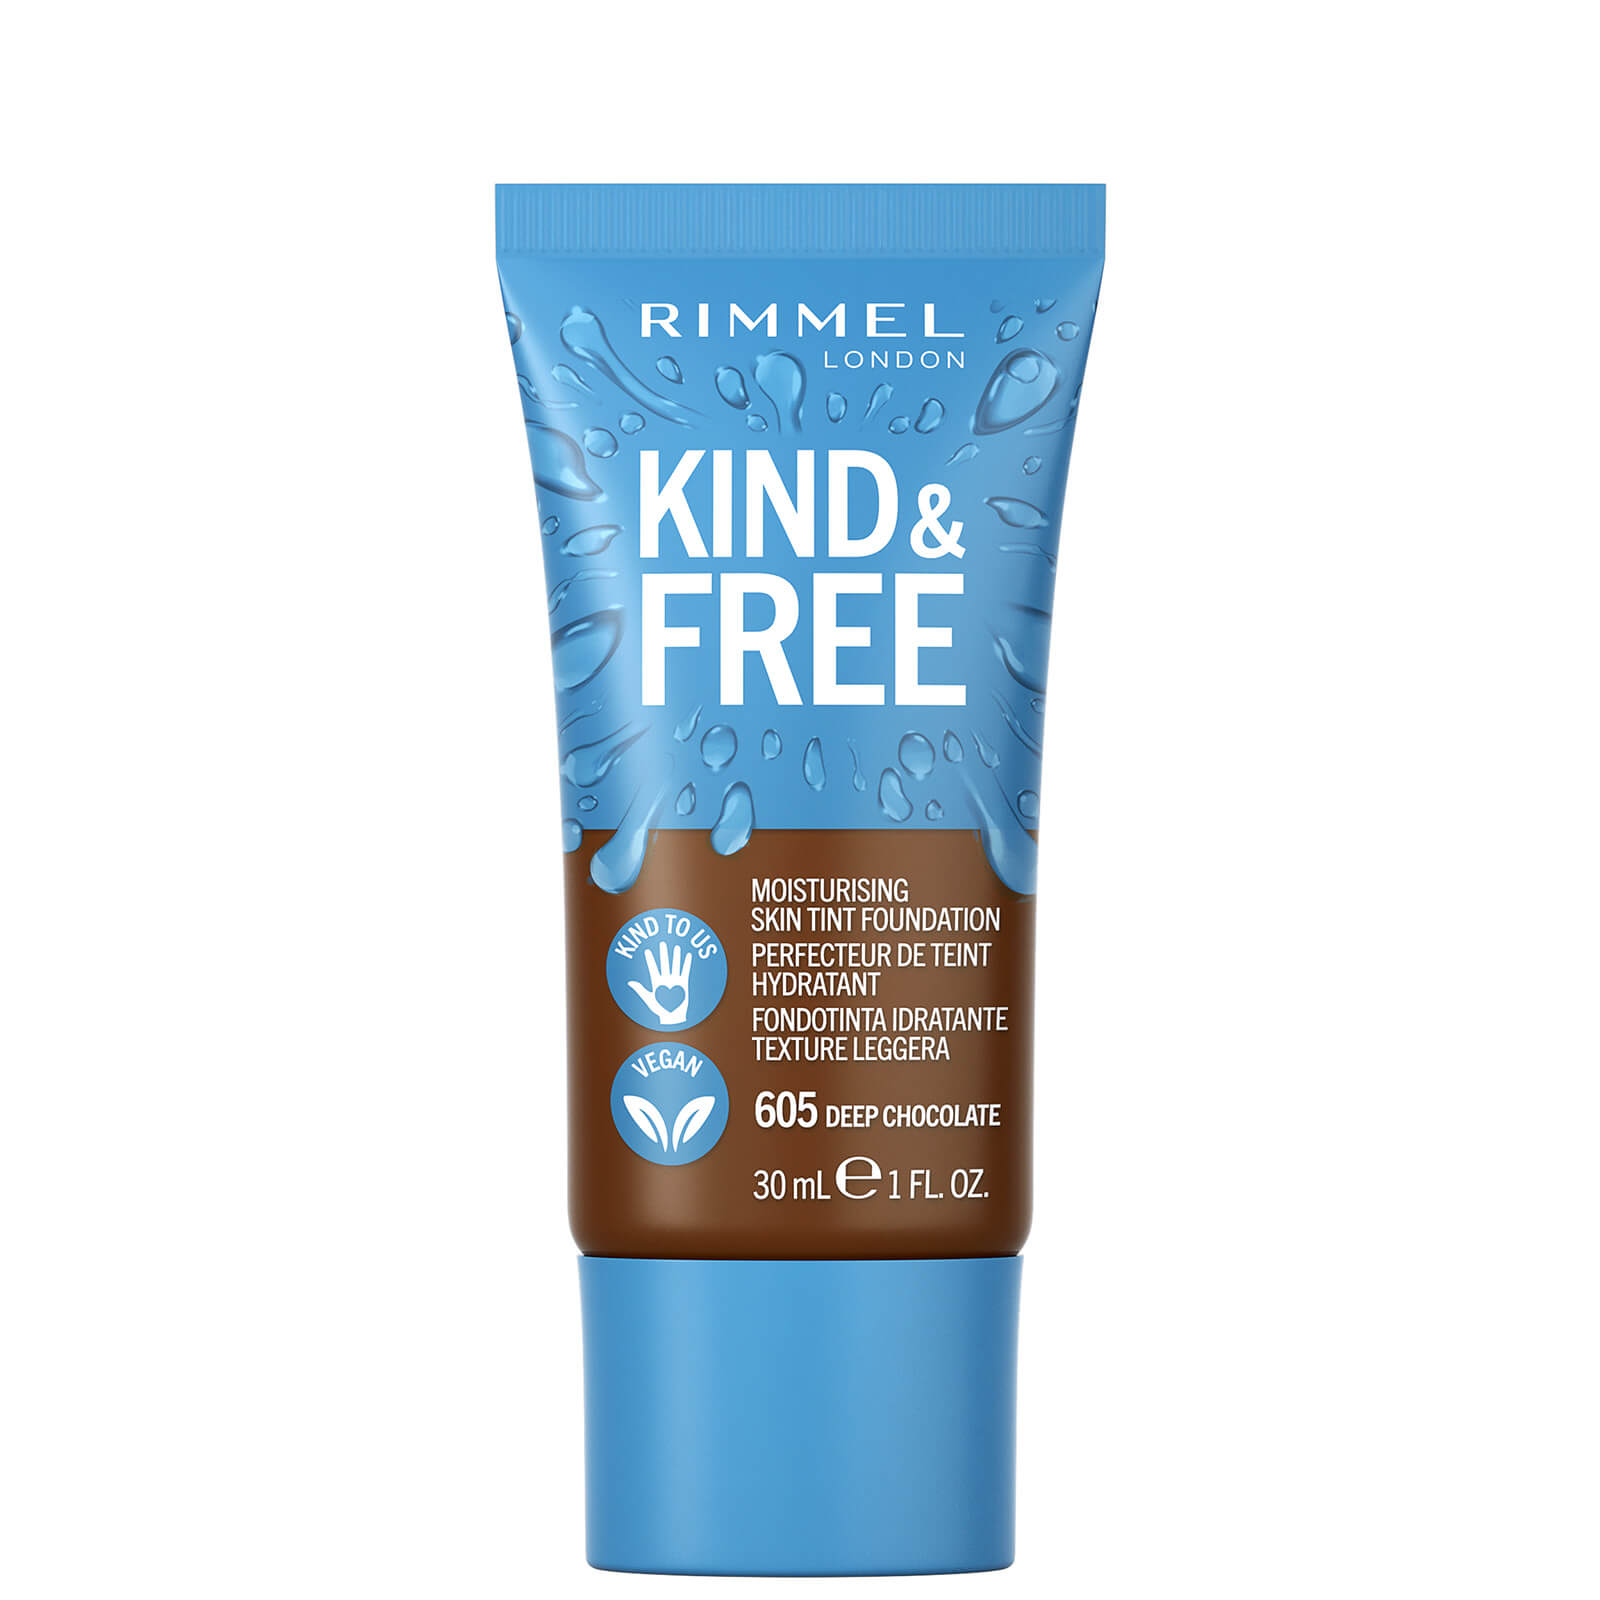 Rimmel Kind and Free Skin Tint Moisturising Foundation 30ml (Various Shades) - Deep Chocolate von Rimmel